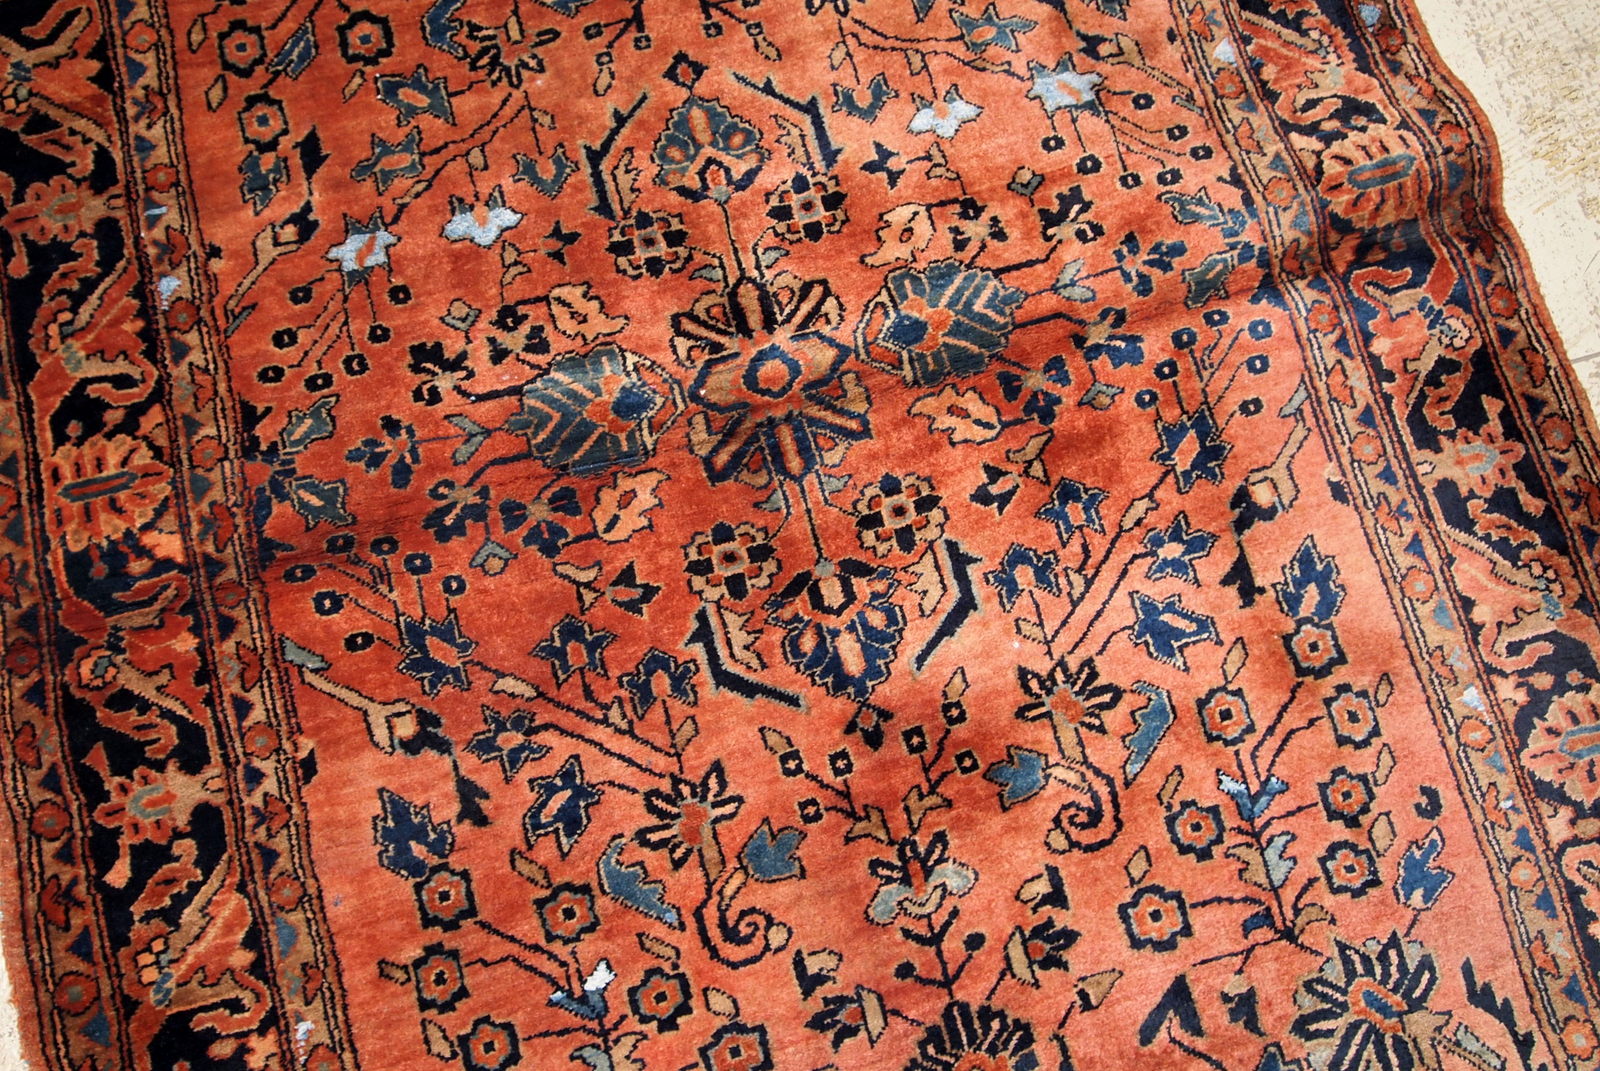 Handmade antique Sarouk rug in original good condition from 1920s. 